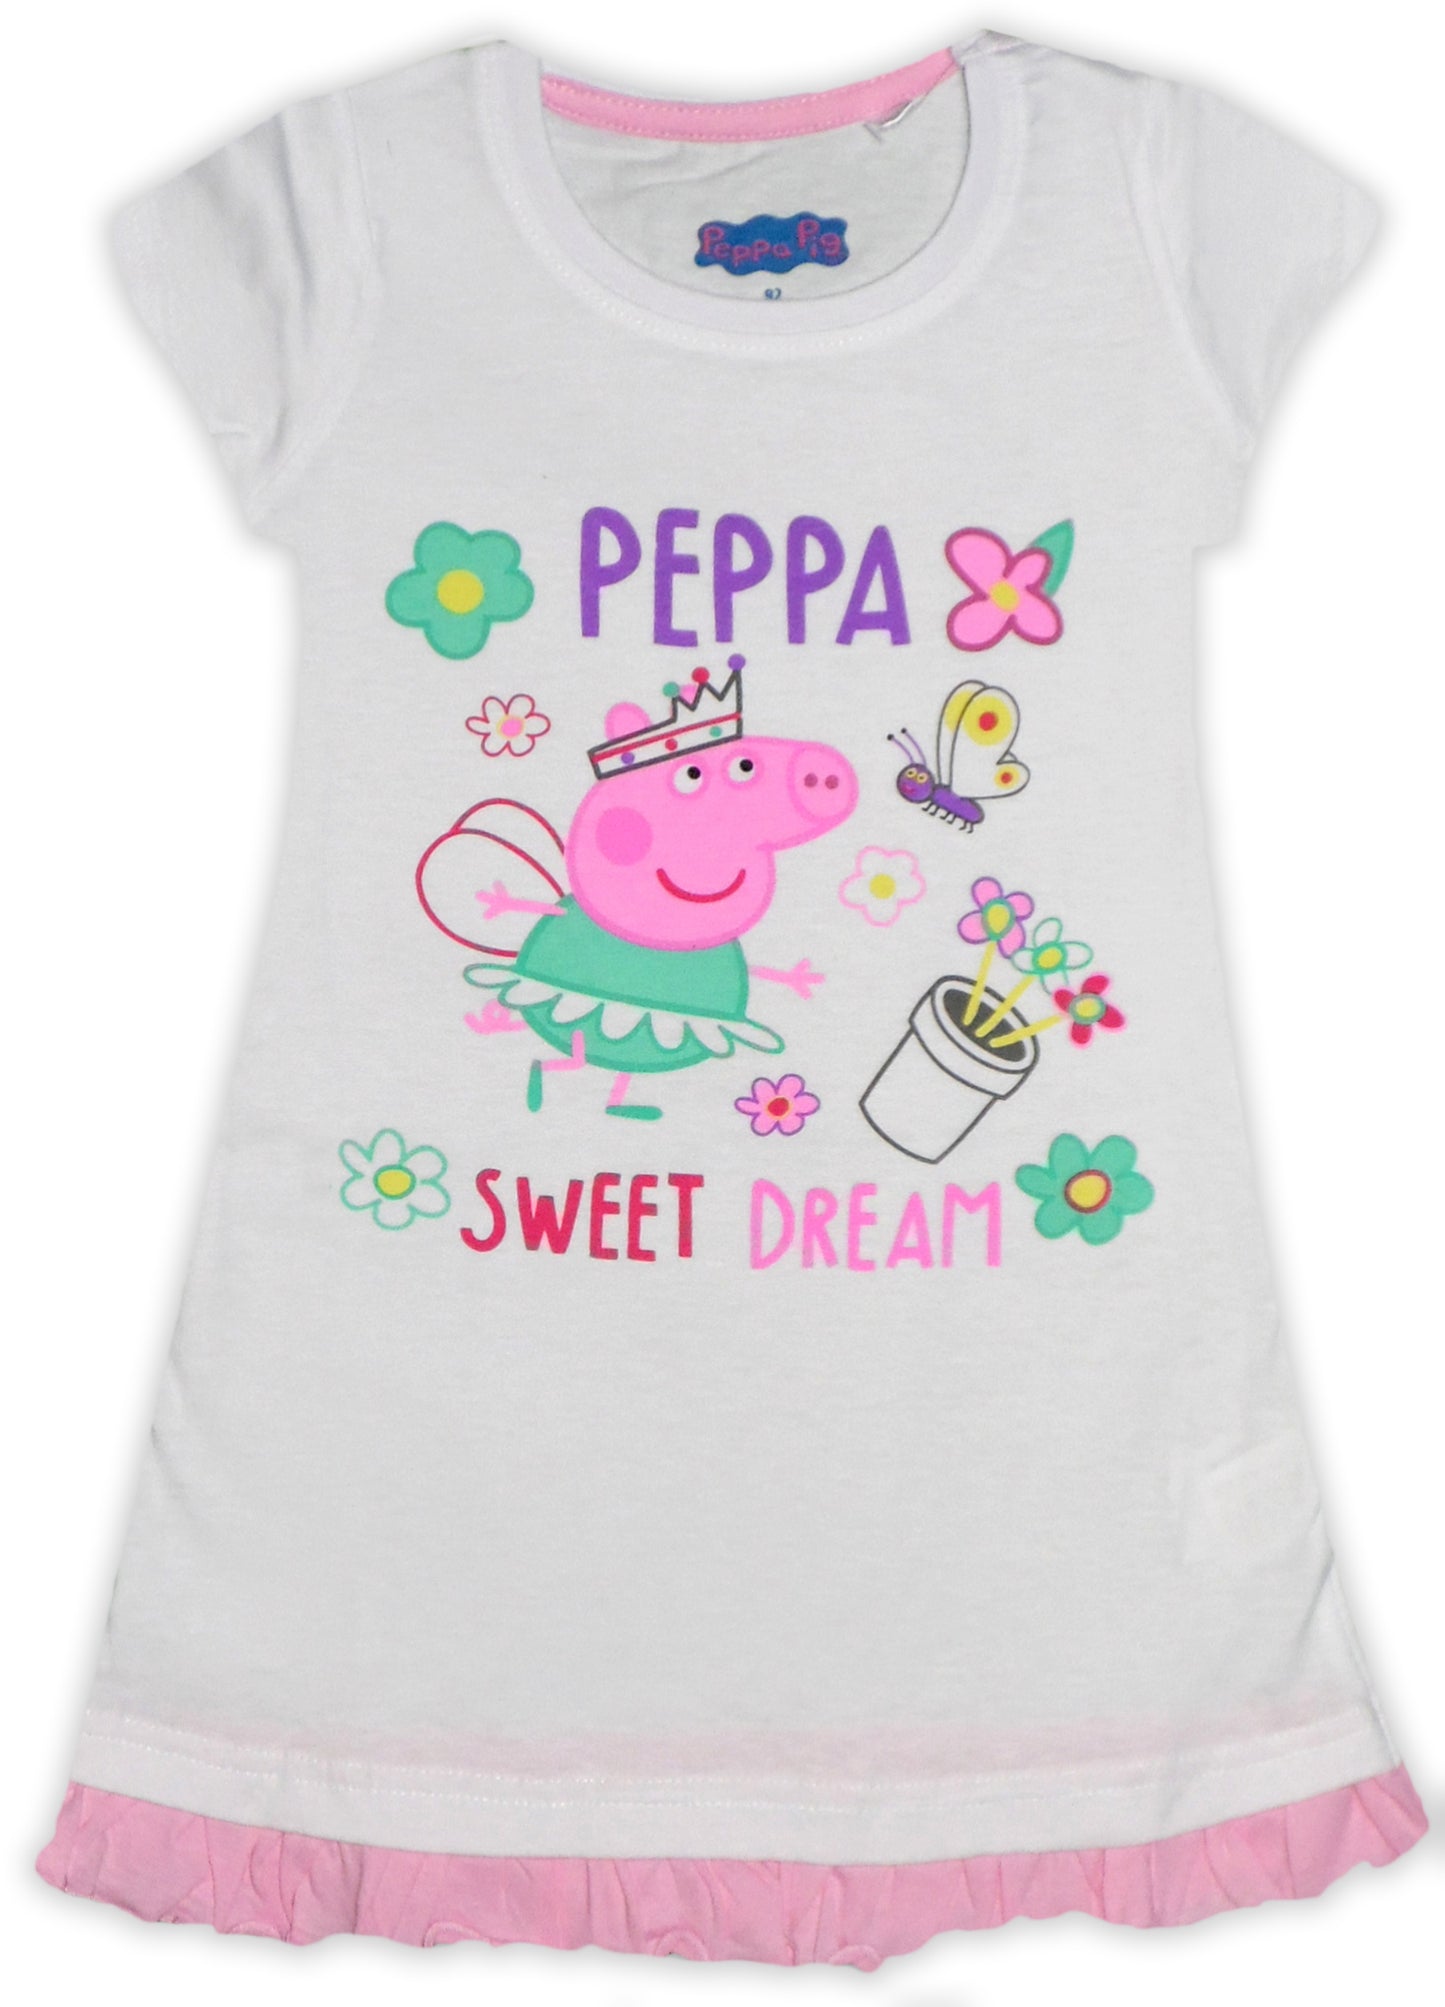 Peppa Pig Cotton Nightshirt Nightie for Girls